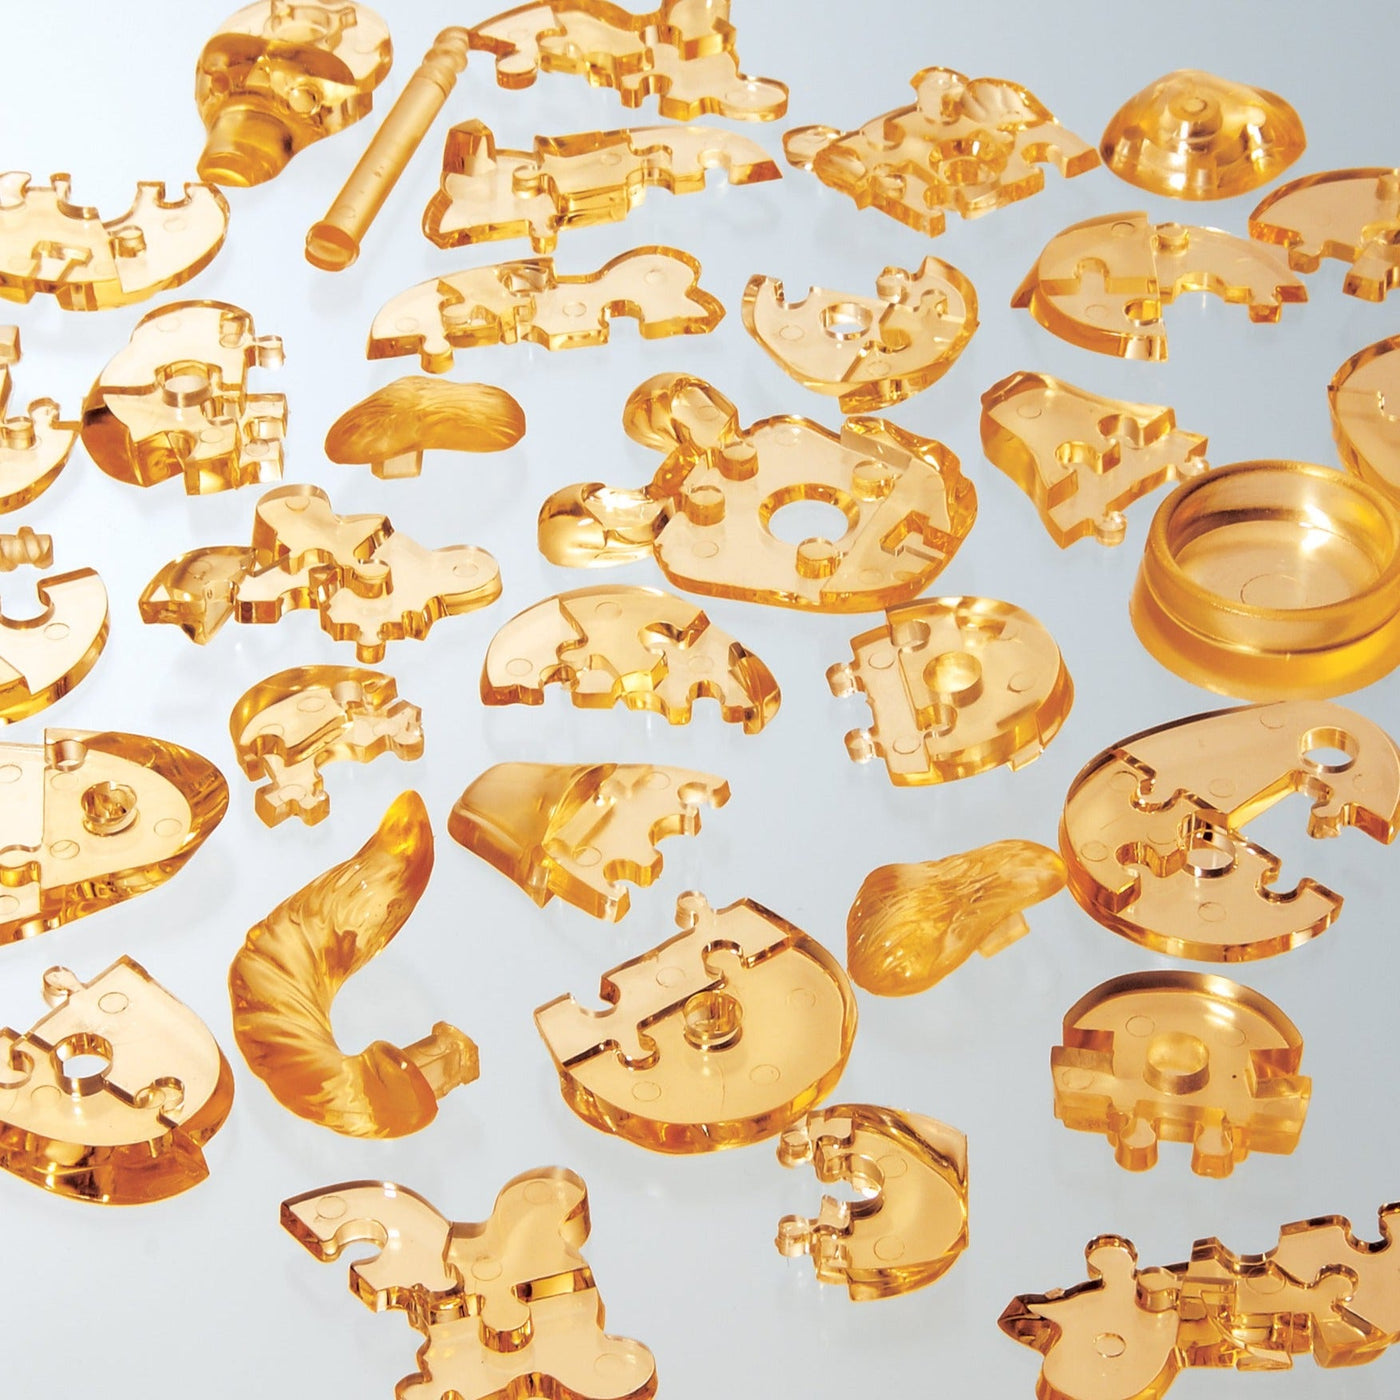 3D Crystal Puzzle: Golden Retriever